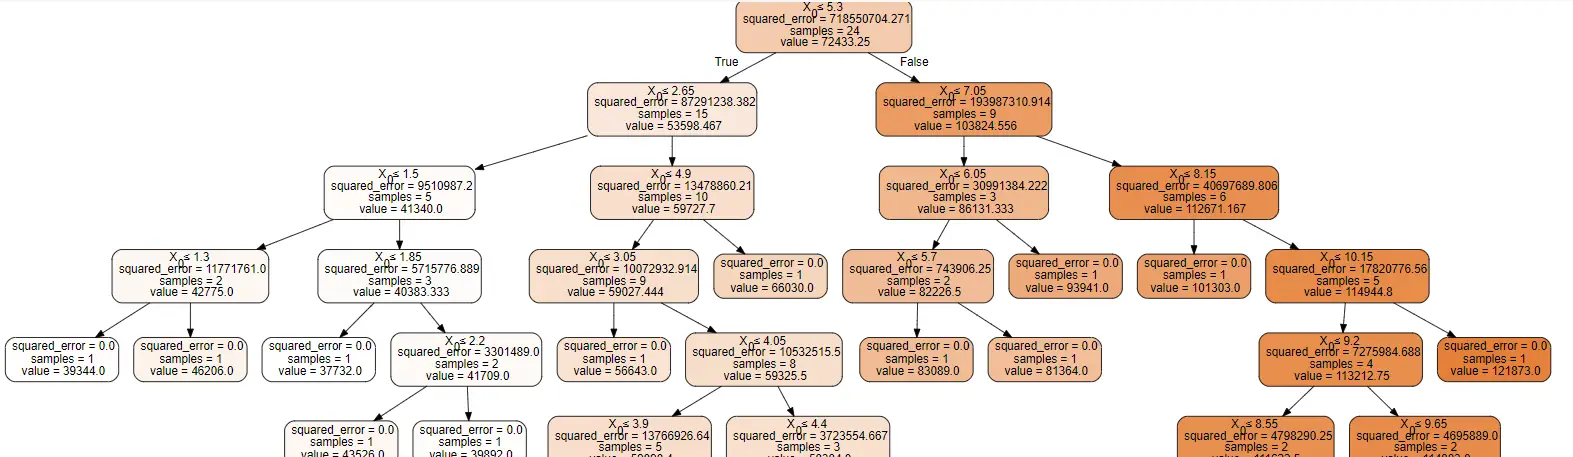 Decision Tree Regressor Visualization